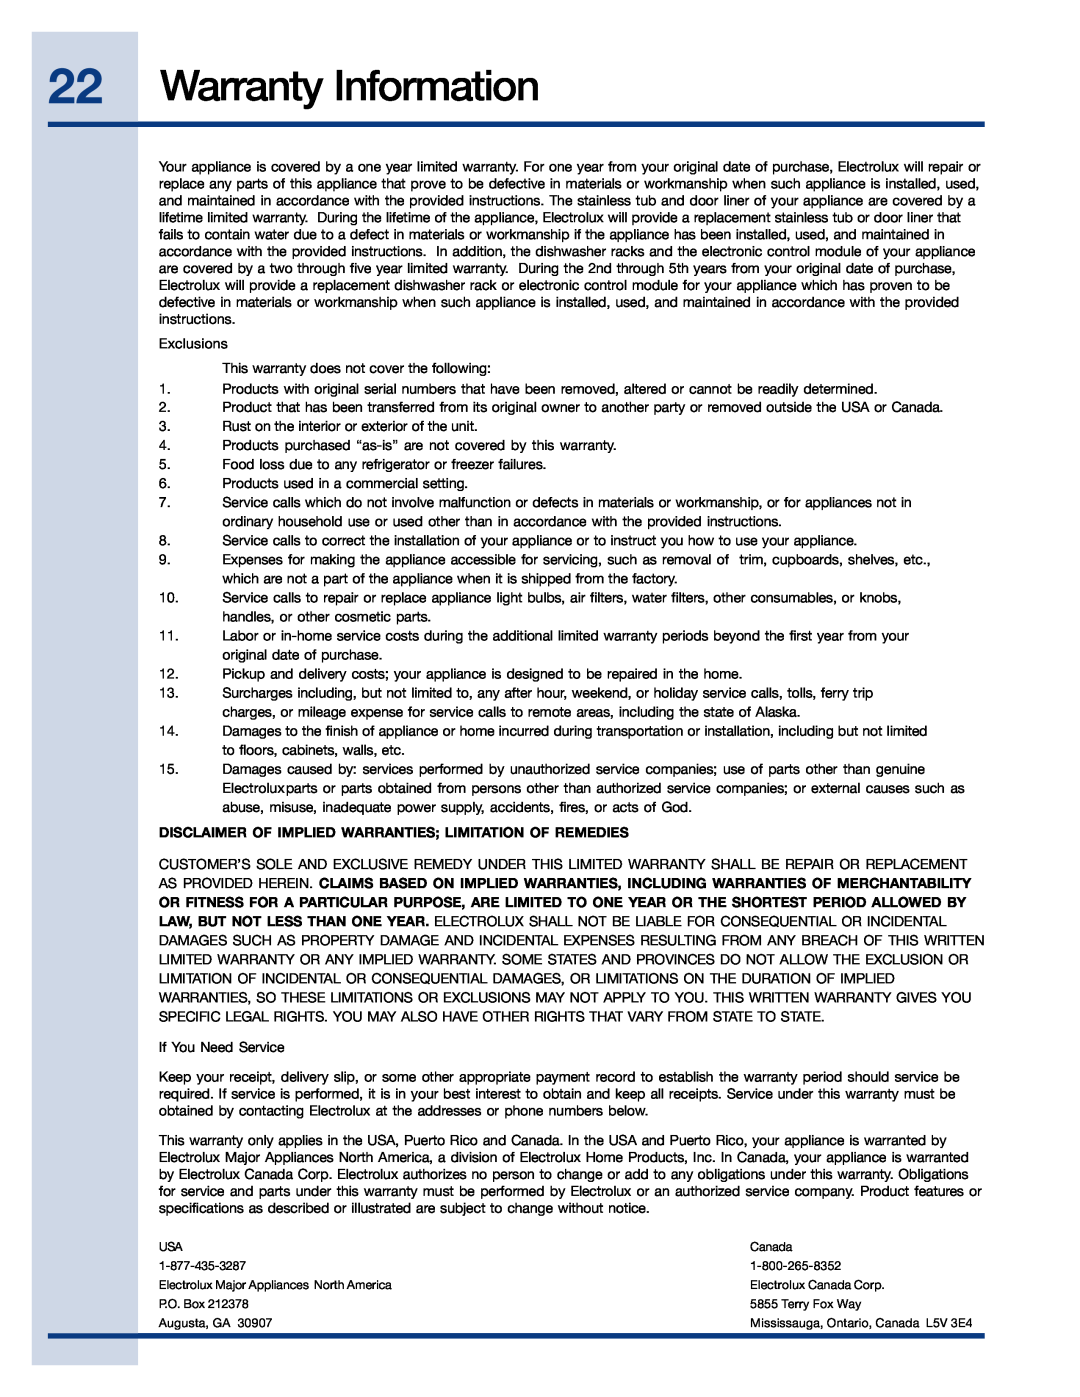 Electrolux 24 manual Warranty Information, Disclaimer Of Implied Warranties Limitation Of Remedies 